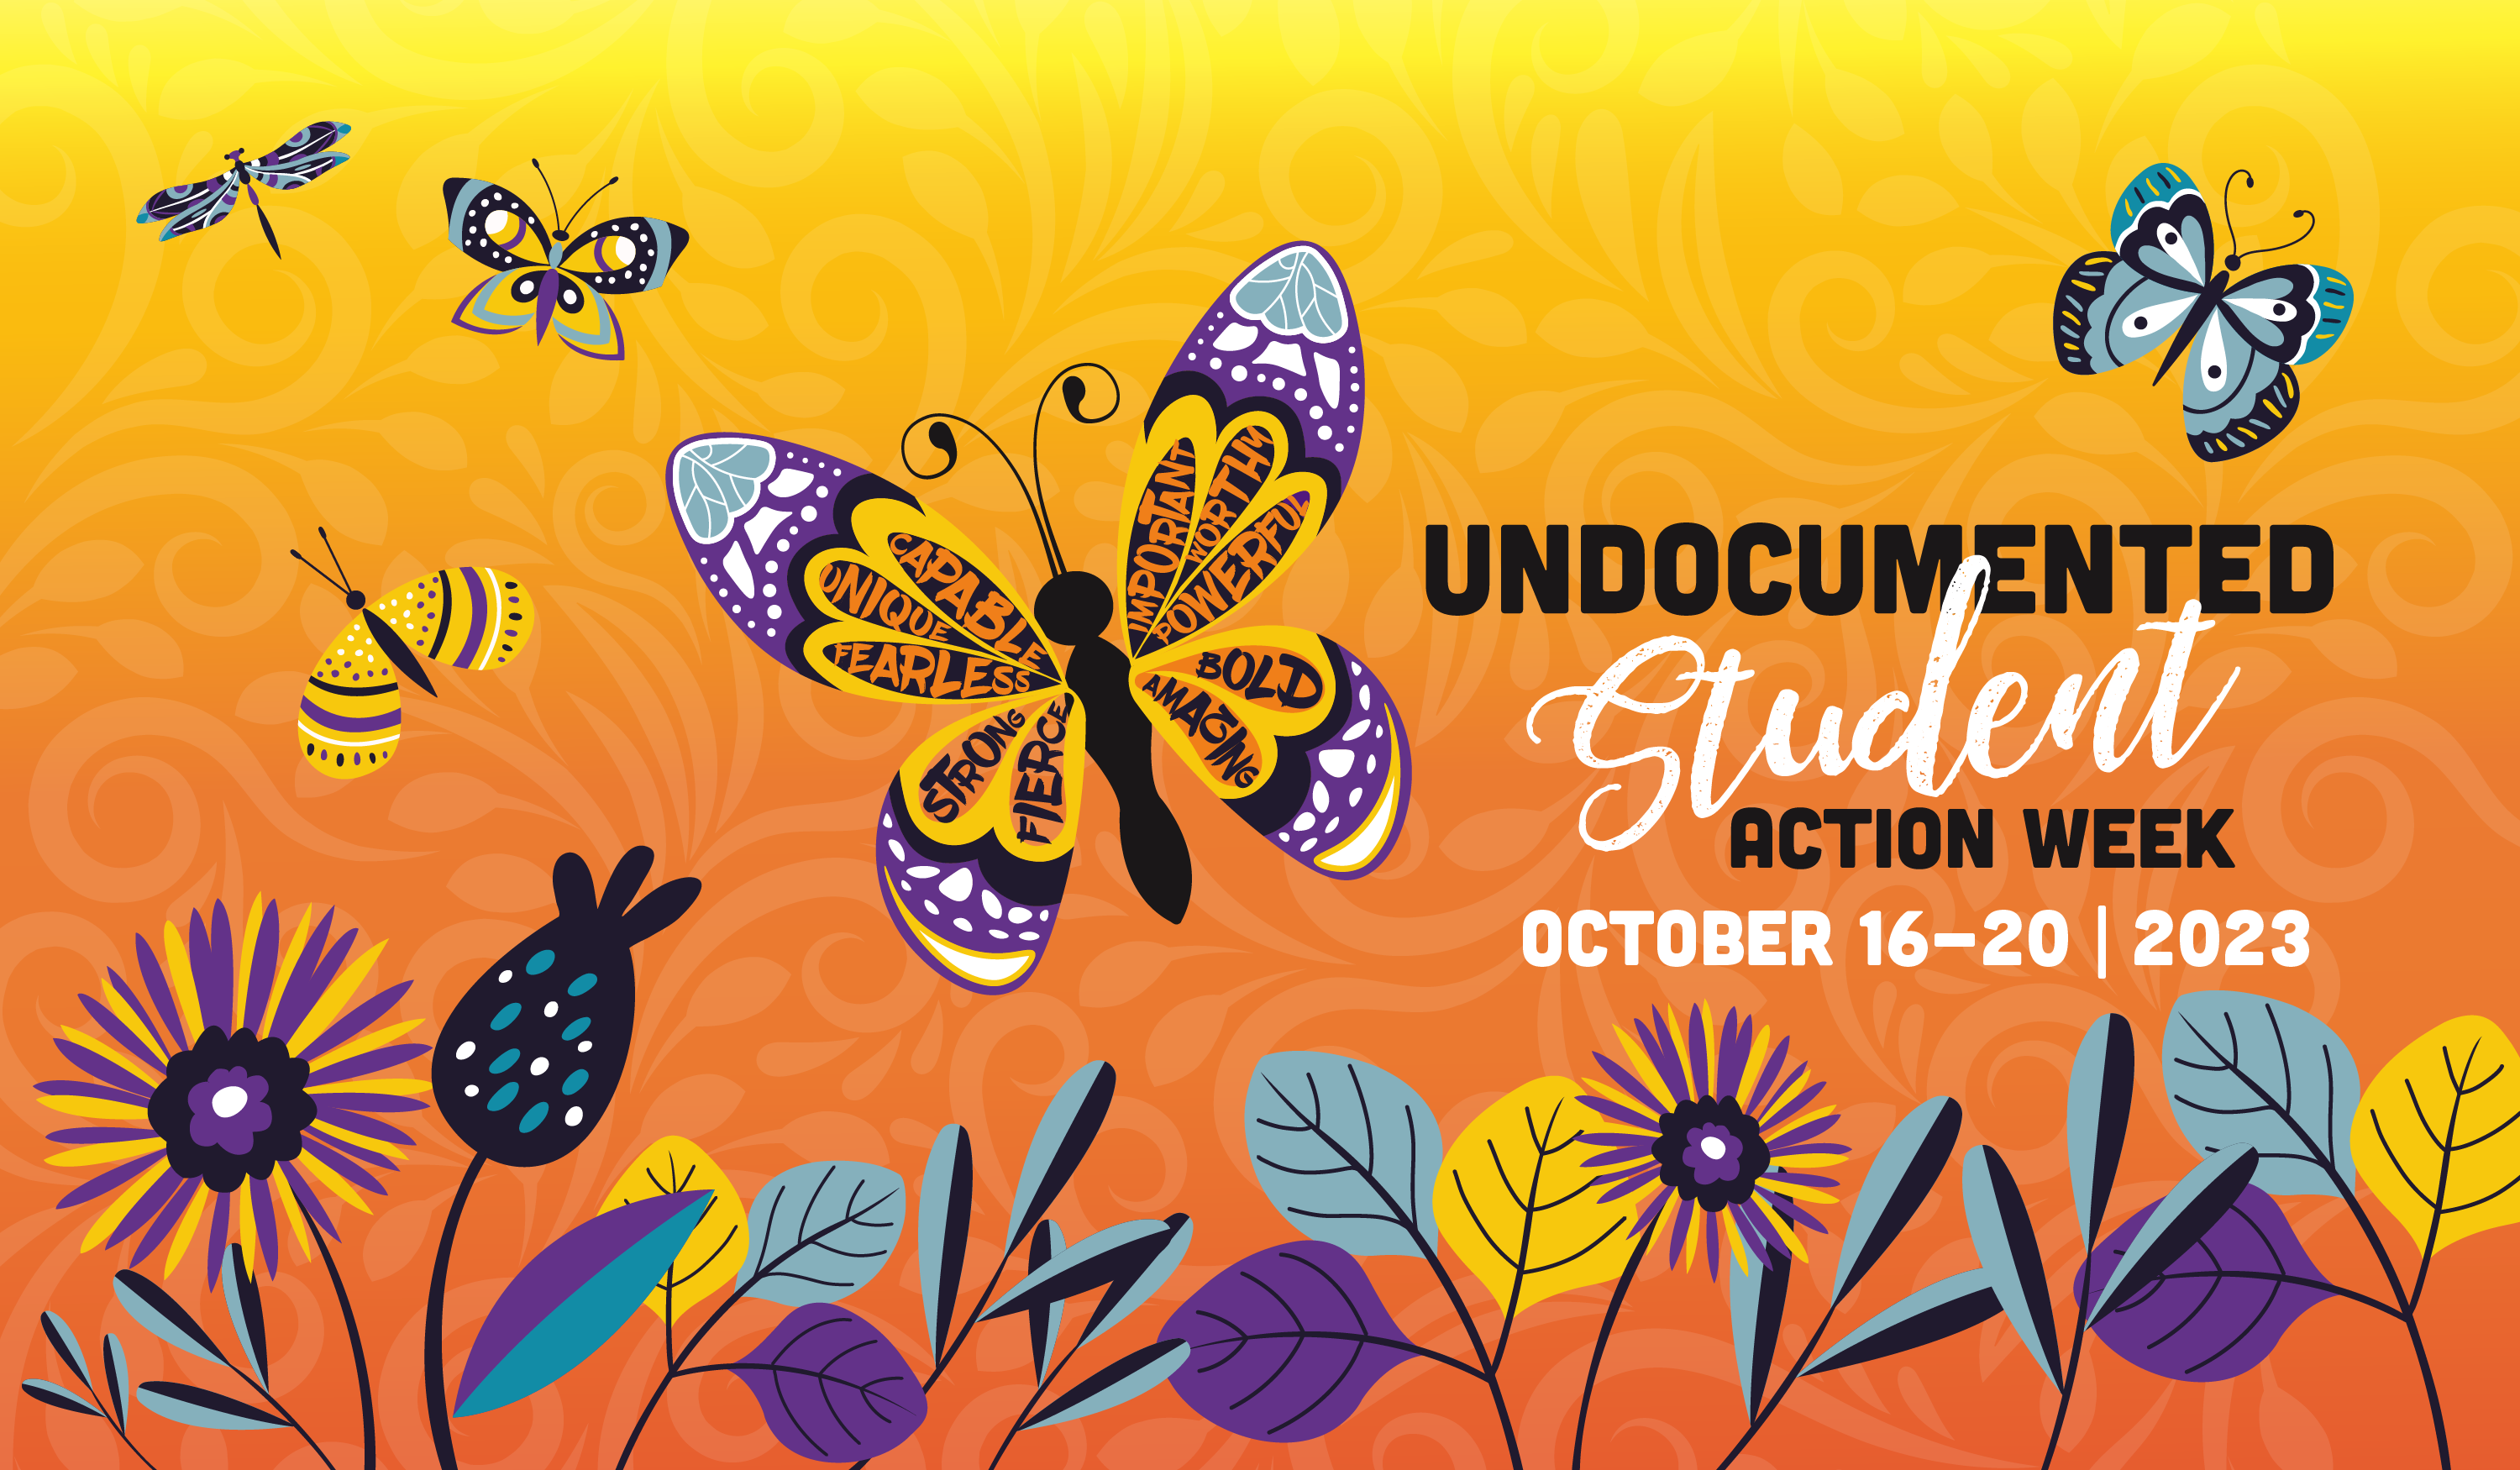 undocumented student action week october 16-20, 2023